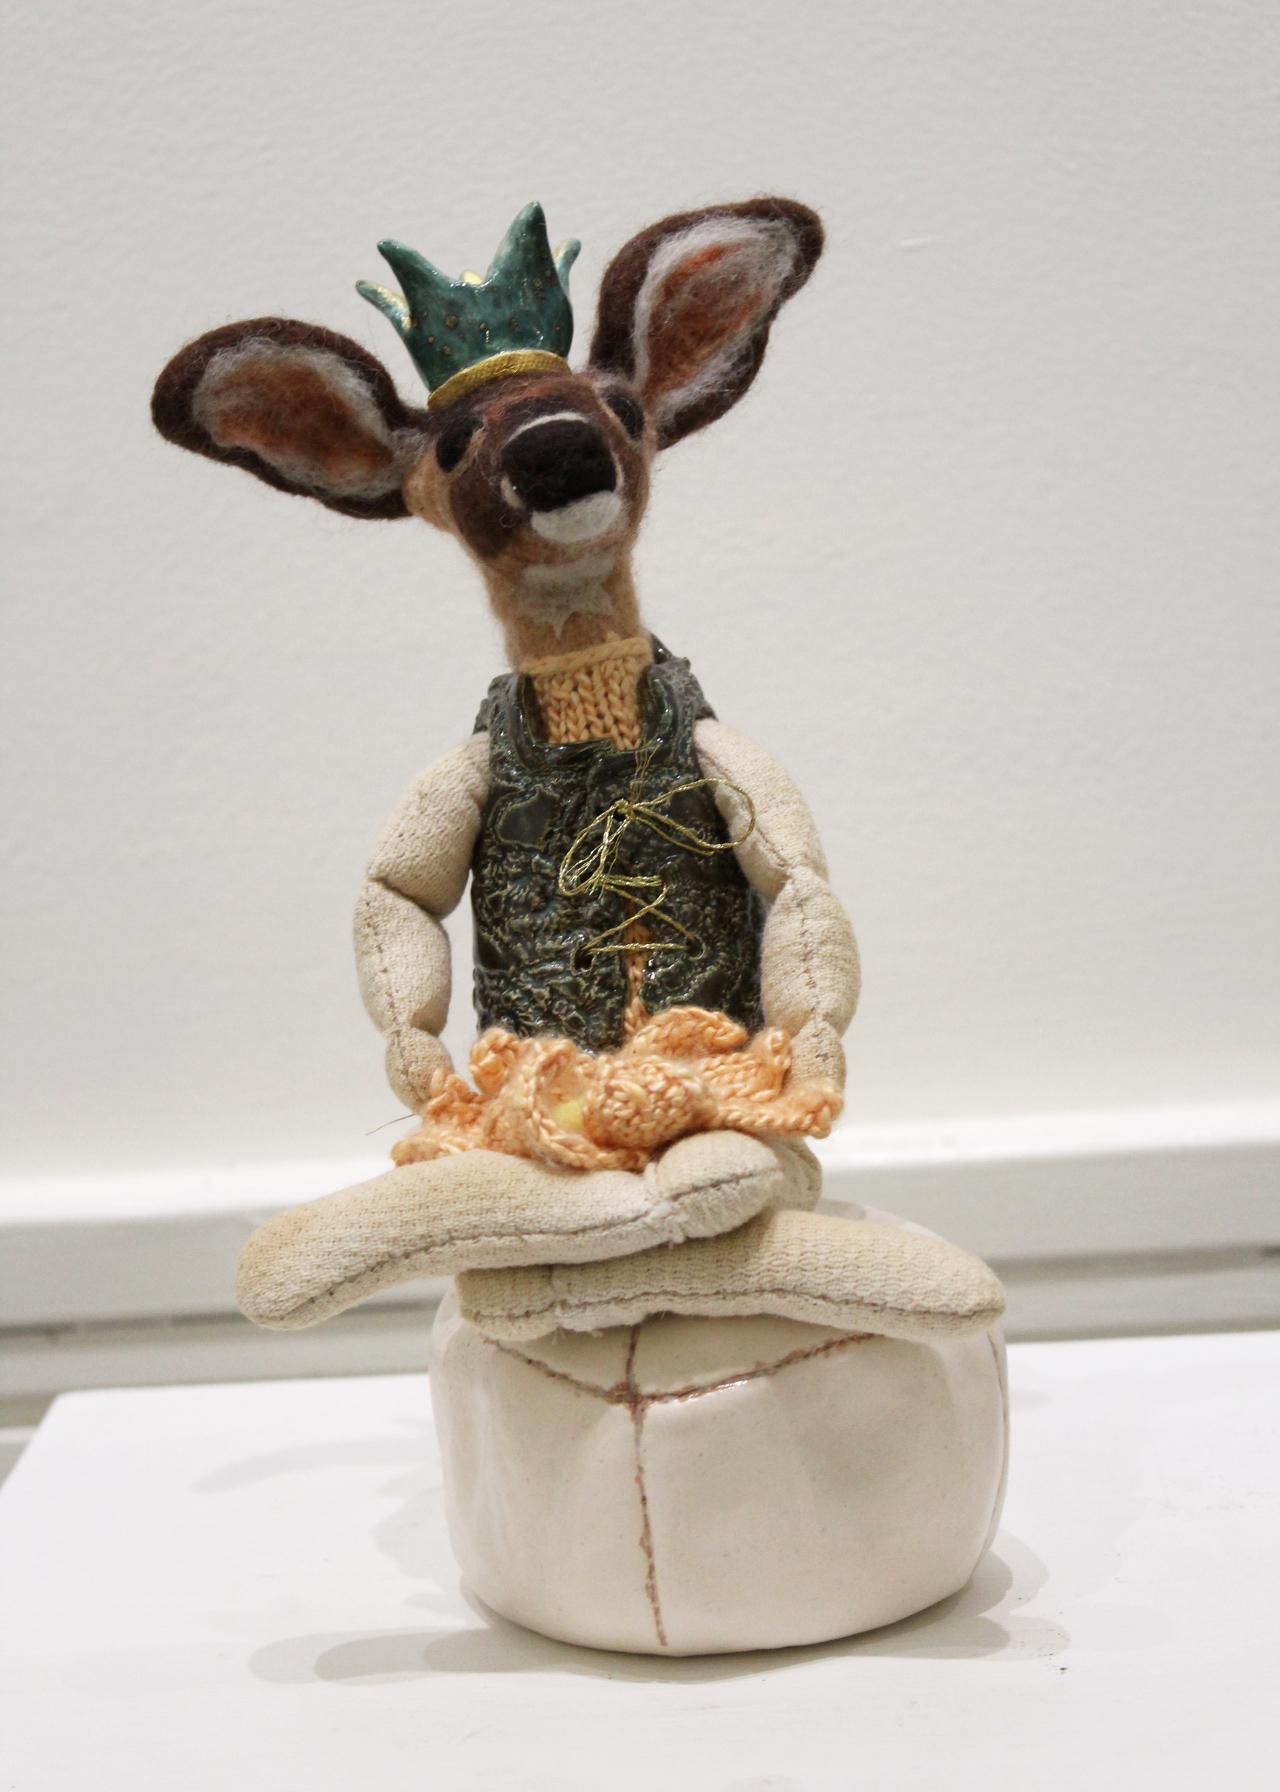 Eva Maier Figurative Sculpture - "The Guide" mixed media, ceramic, felted wool, small, original deer sculpture